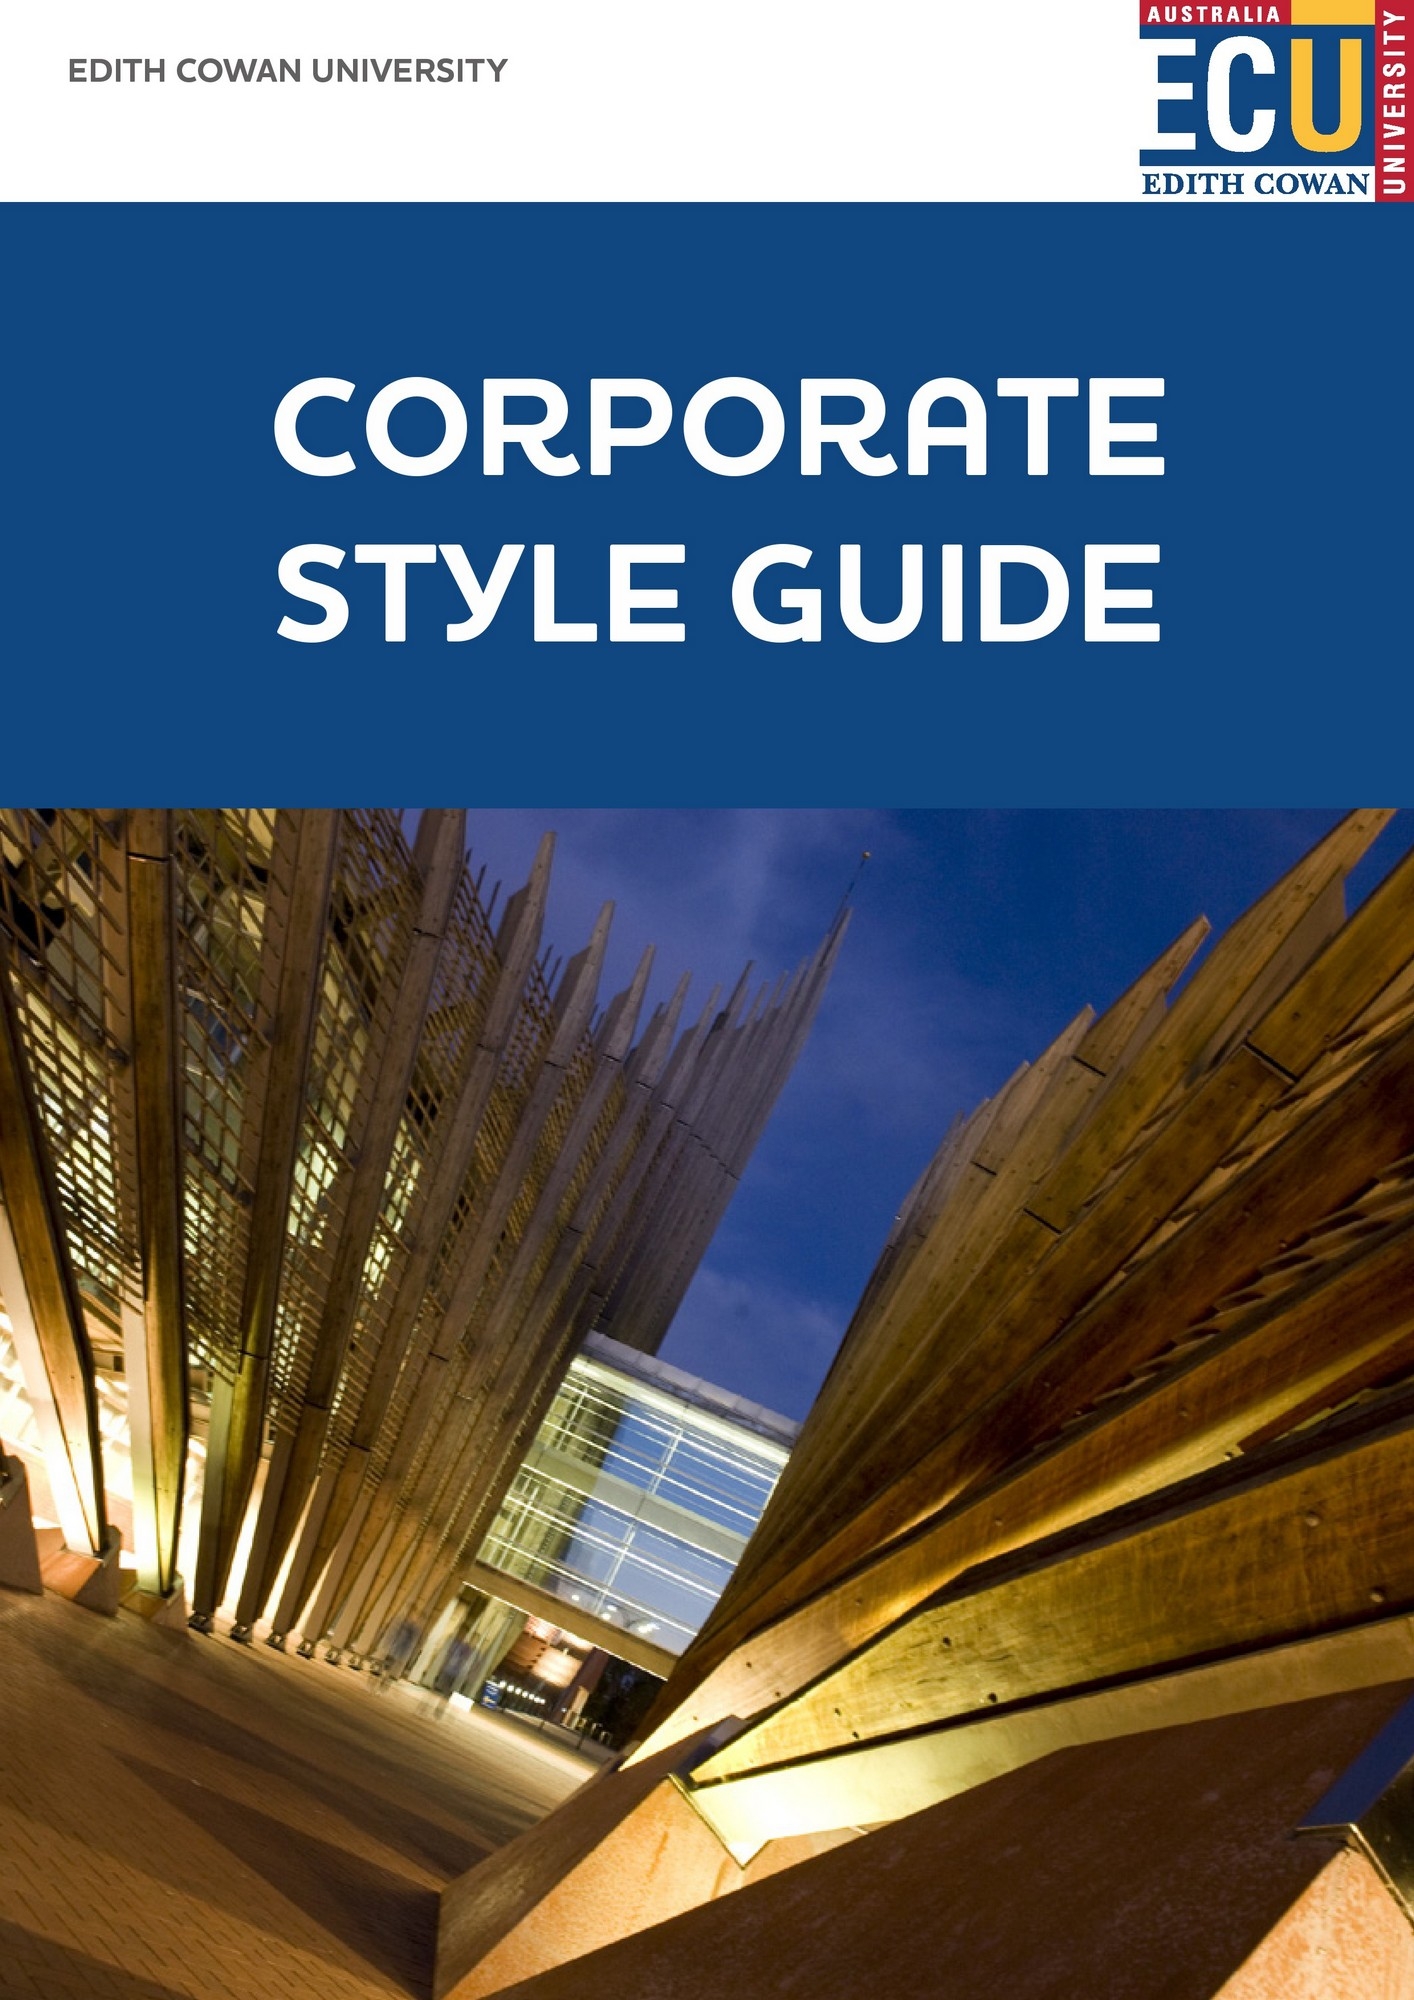 Edith Cowan University 2010 Corporate Style Guide